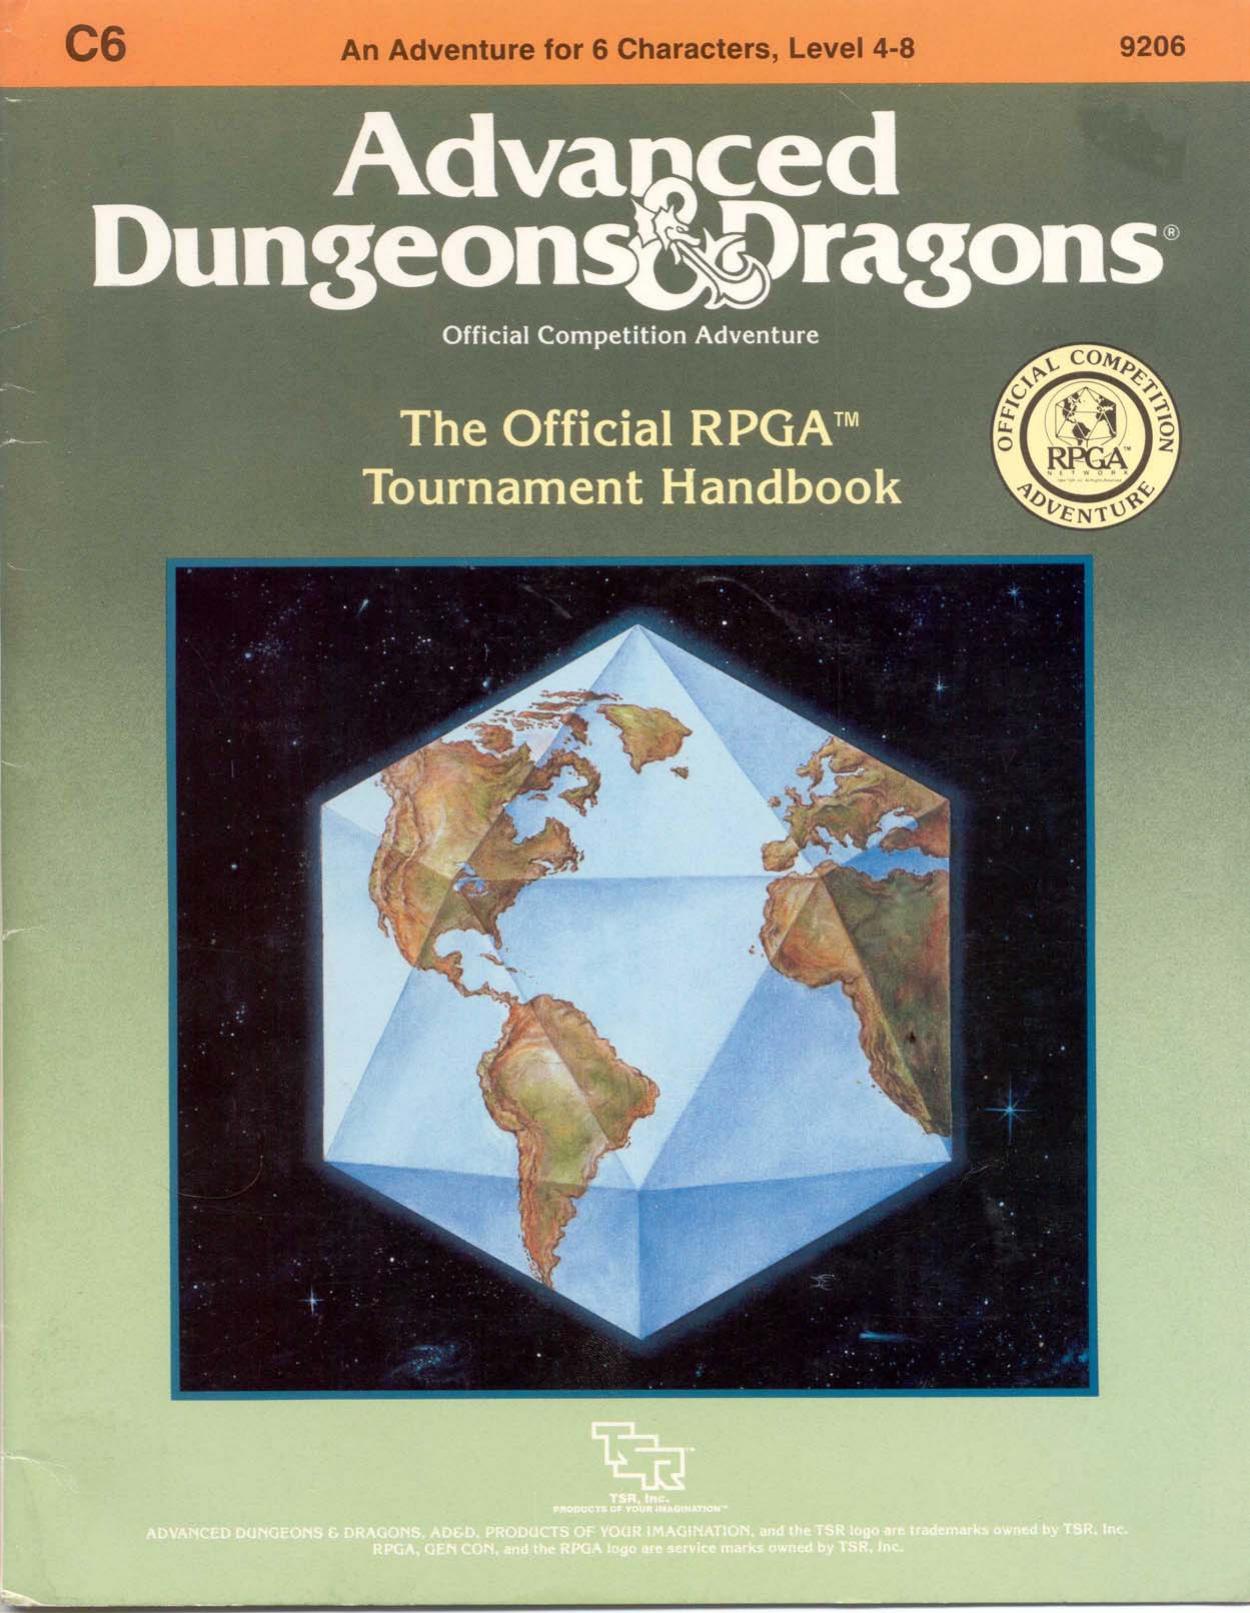 The Official RPGA Tournament Handbook